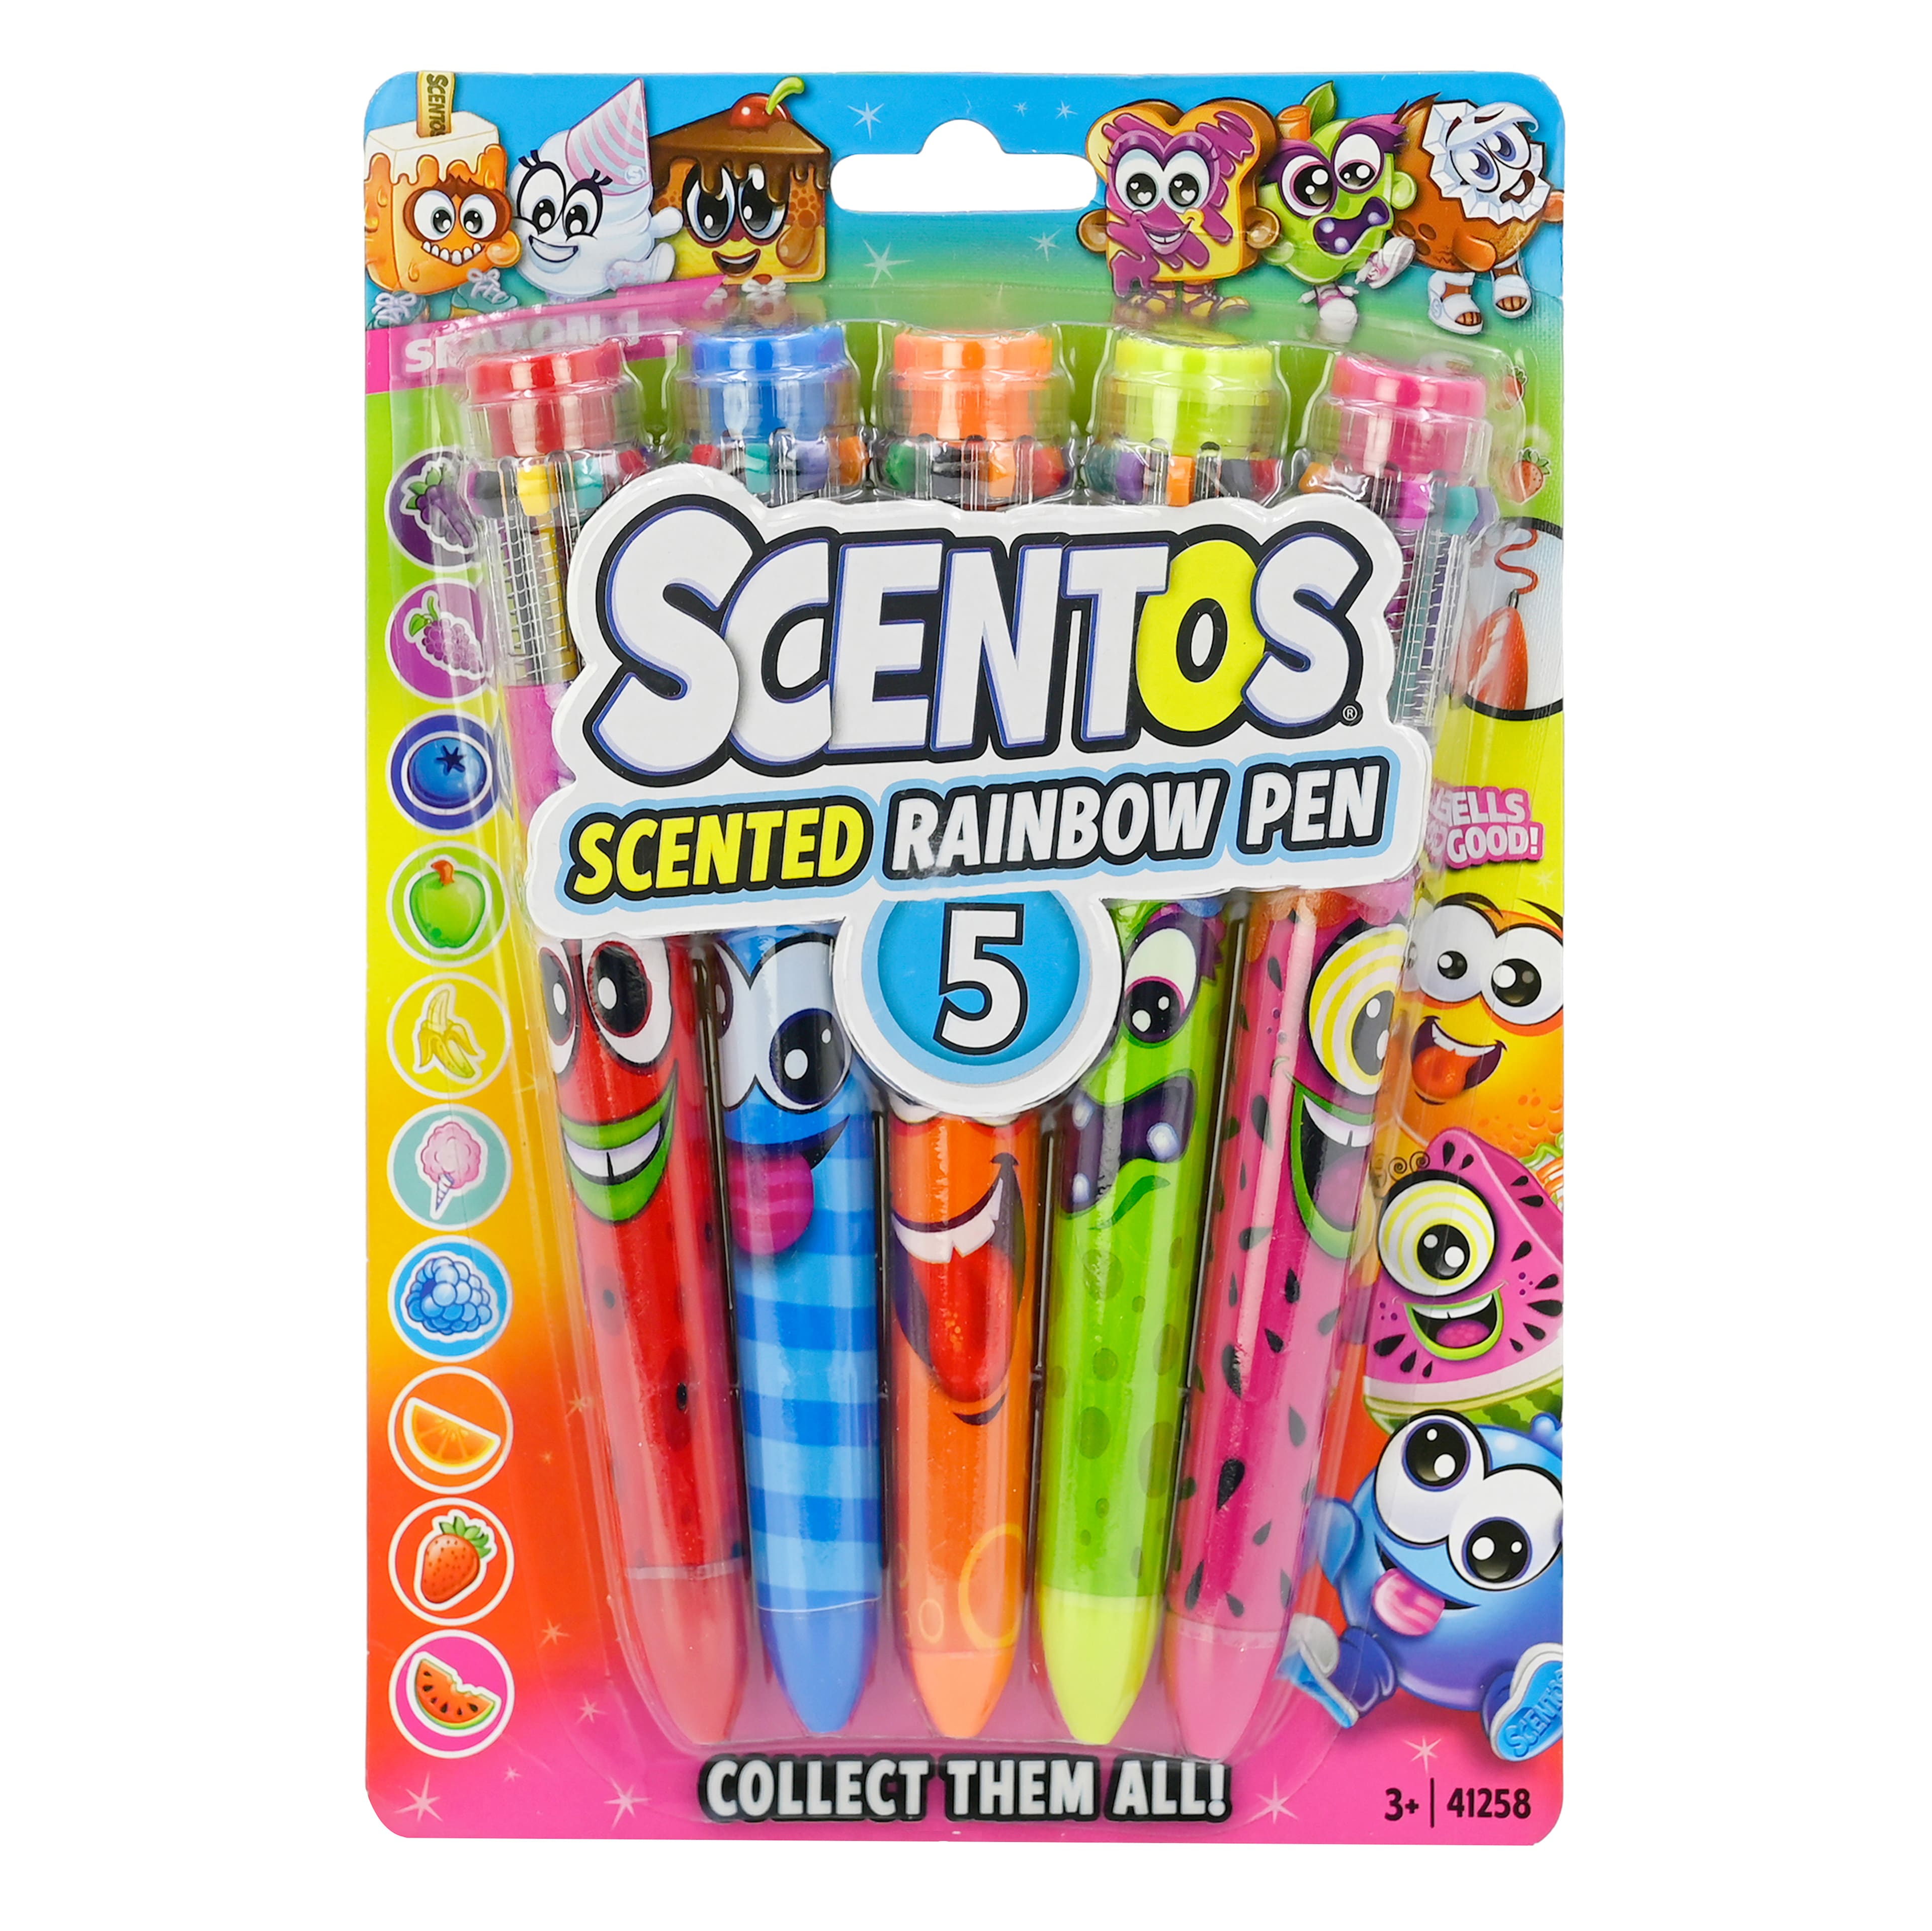 Scentos Scented Rainbow Pens 5 Count Set